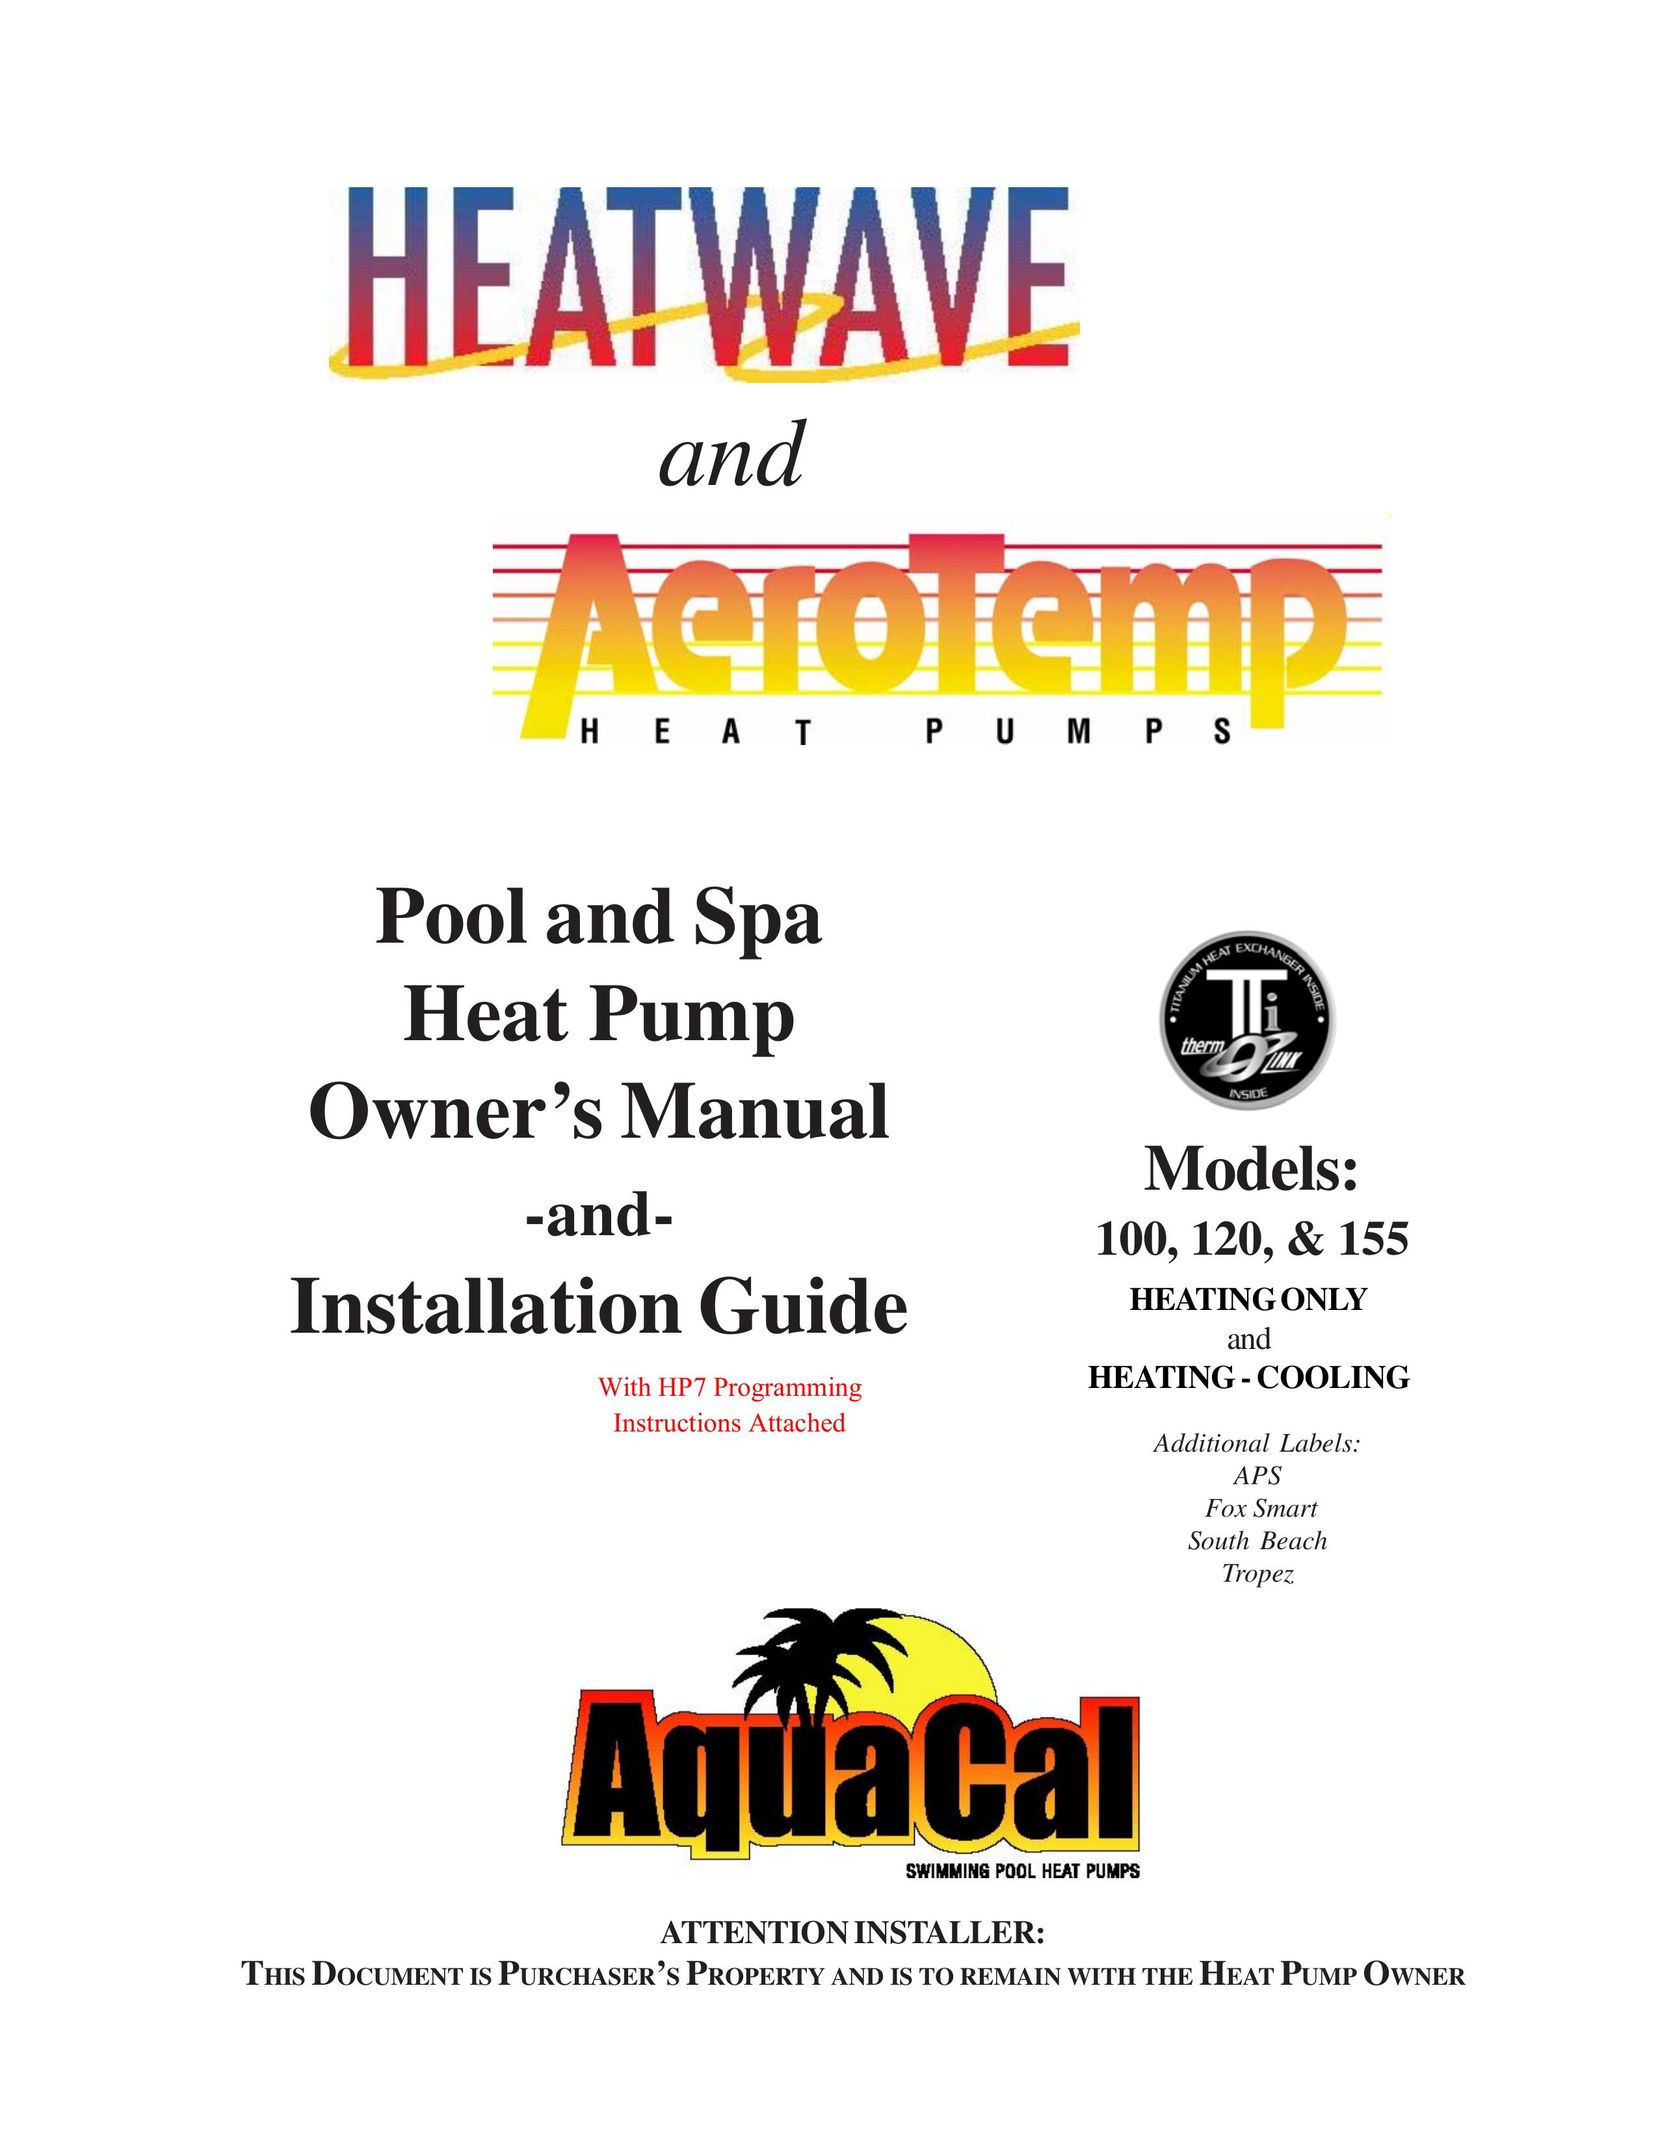 Aquacal 100 Heat Pump User Manual